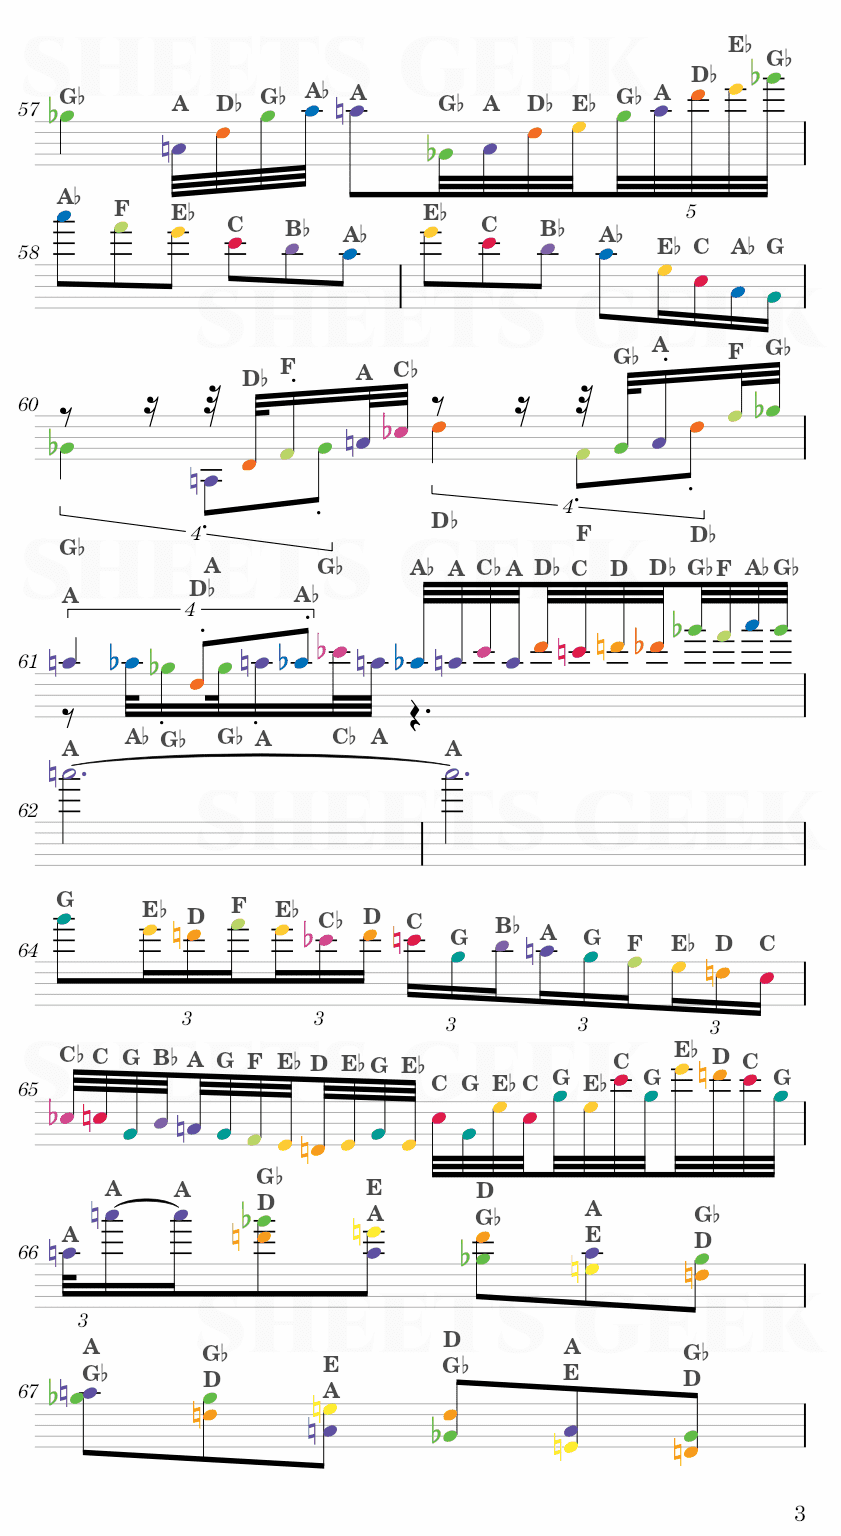 Romance, Op. 11 - Antonin Dvorak Easy Sheet Music Free for piano, keyboard, flute, violin, sax, cello page 3